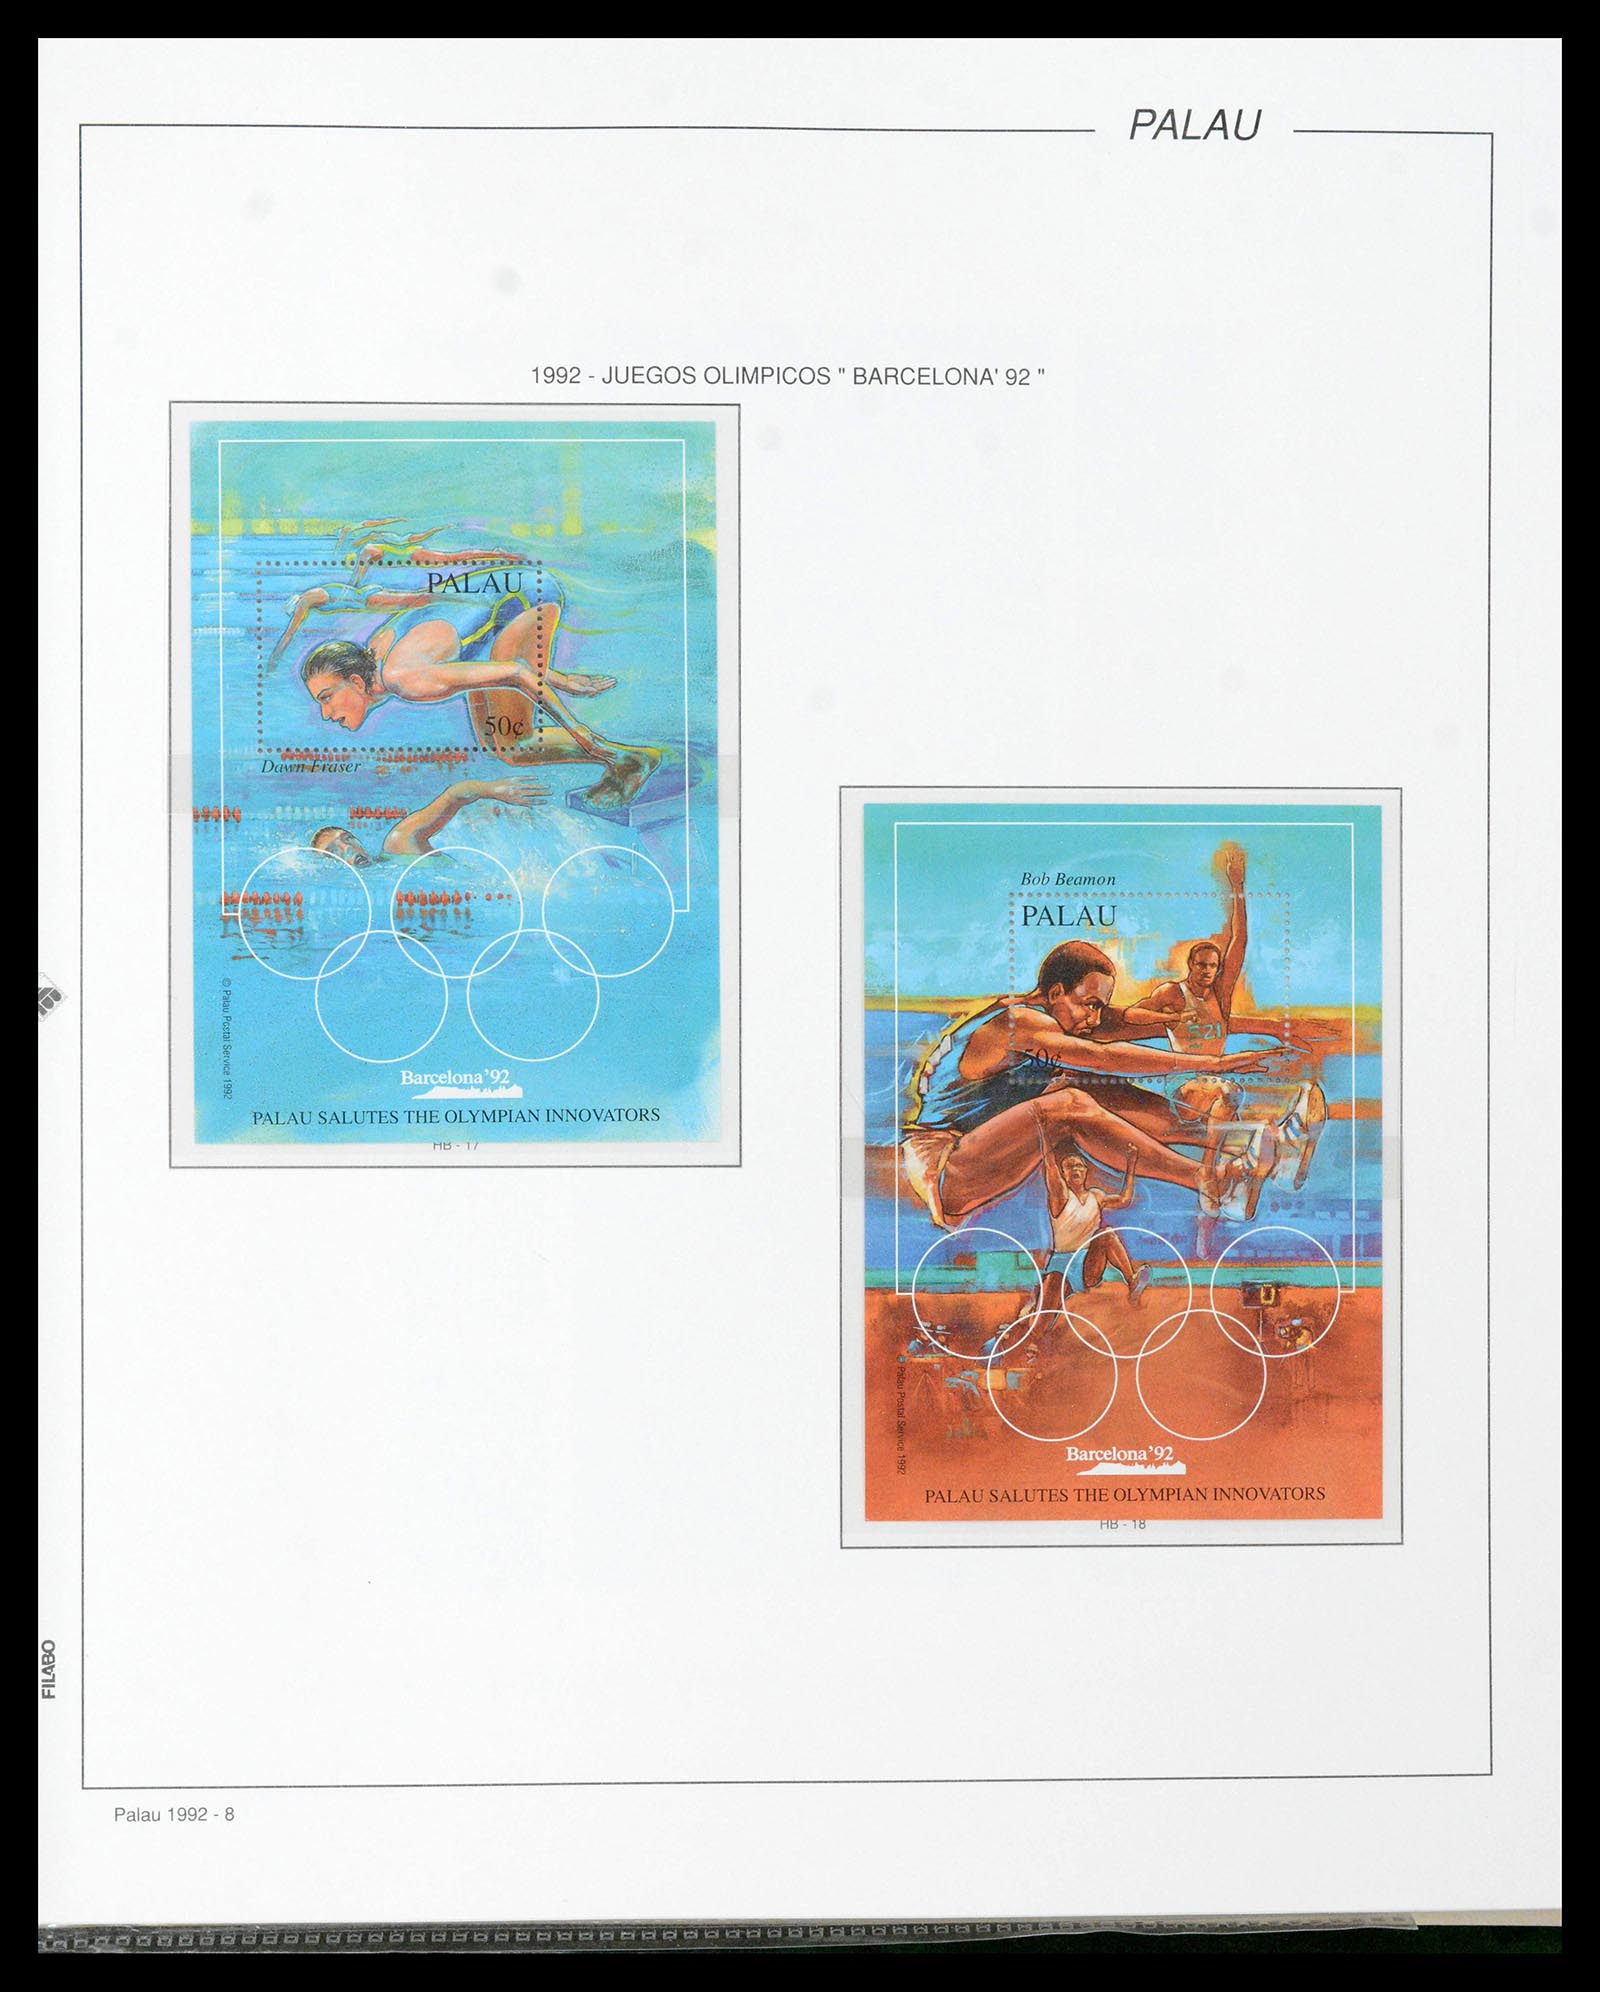 39222 0057 - Stamp collection 39222 Palau, Micronesia and Marshall islands 1980-1995.